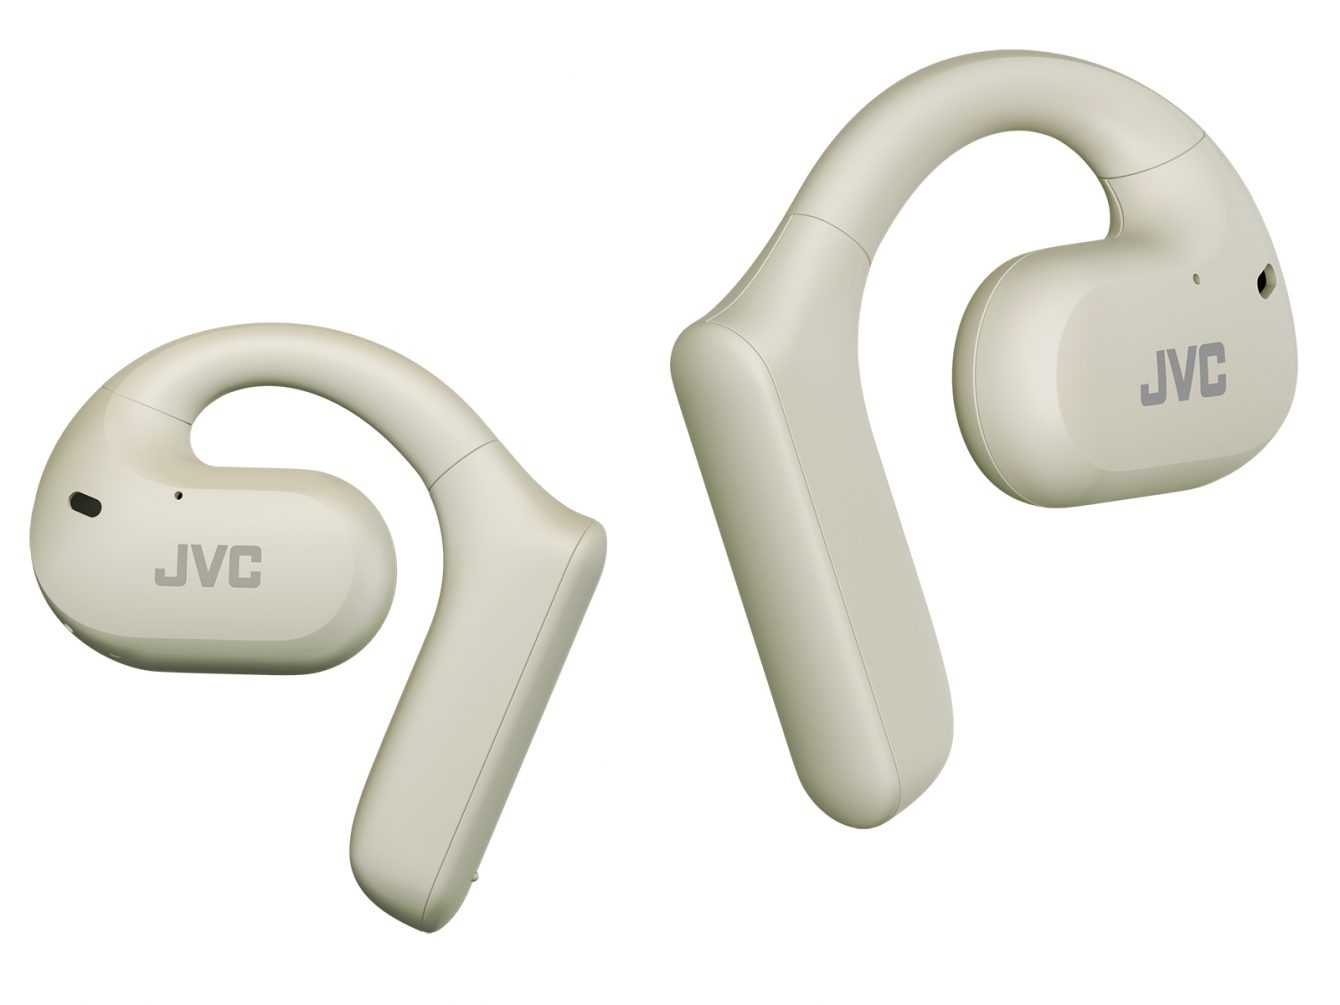 JVC: introduces the new Nearphones HA-NP35T earphones